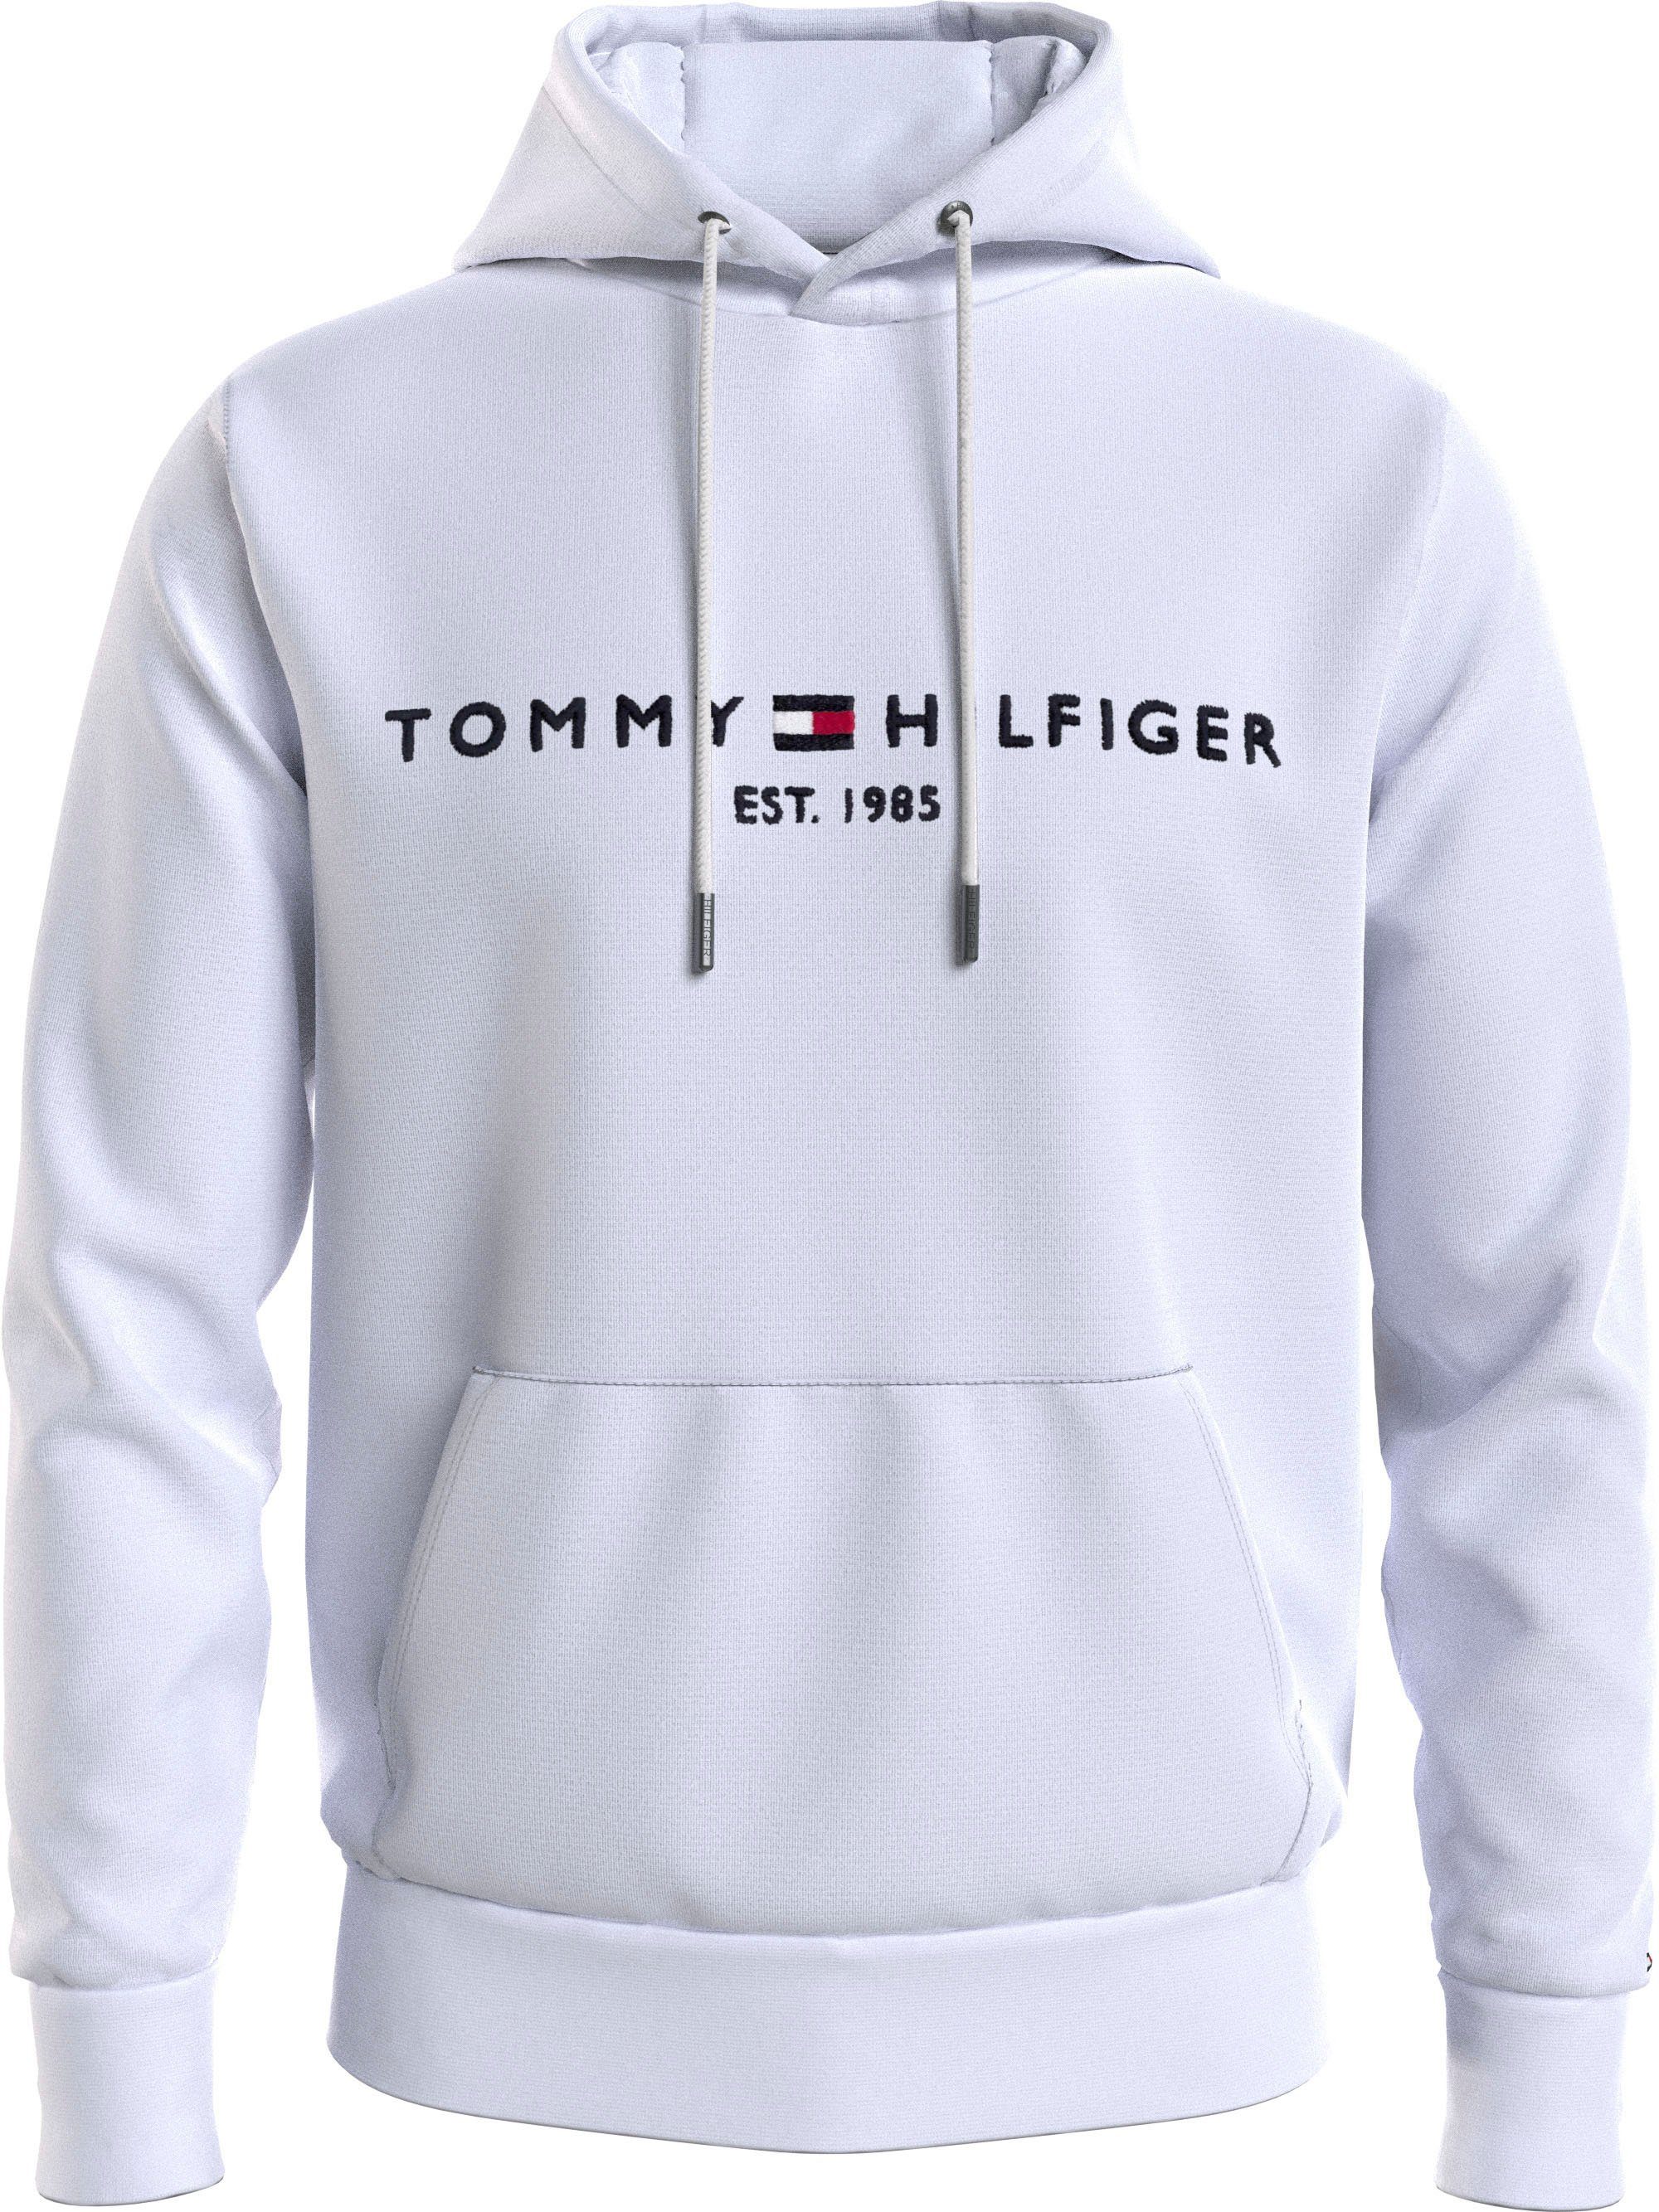 Preis und Auswahl an Big BT-TOMMY & Hilfiger HOODY-B Tommy Hoodie Tall White LOGO